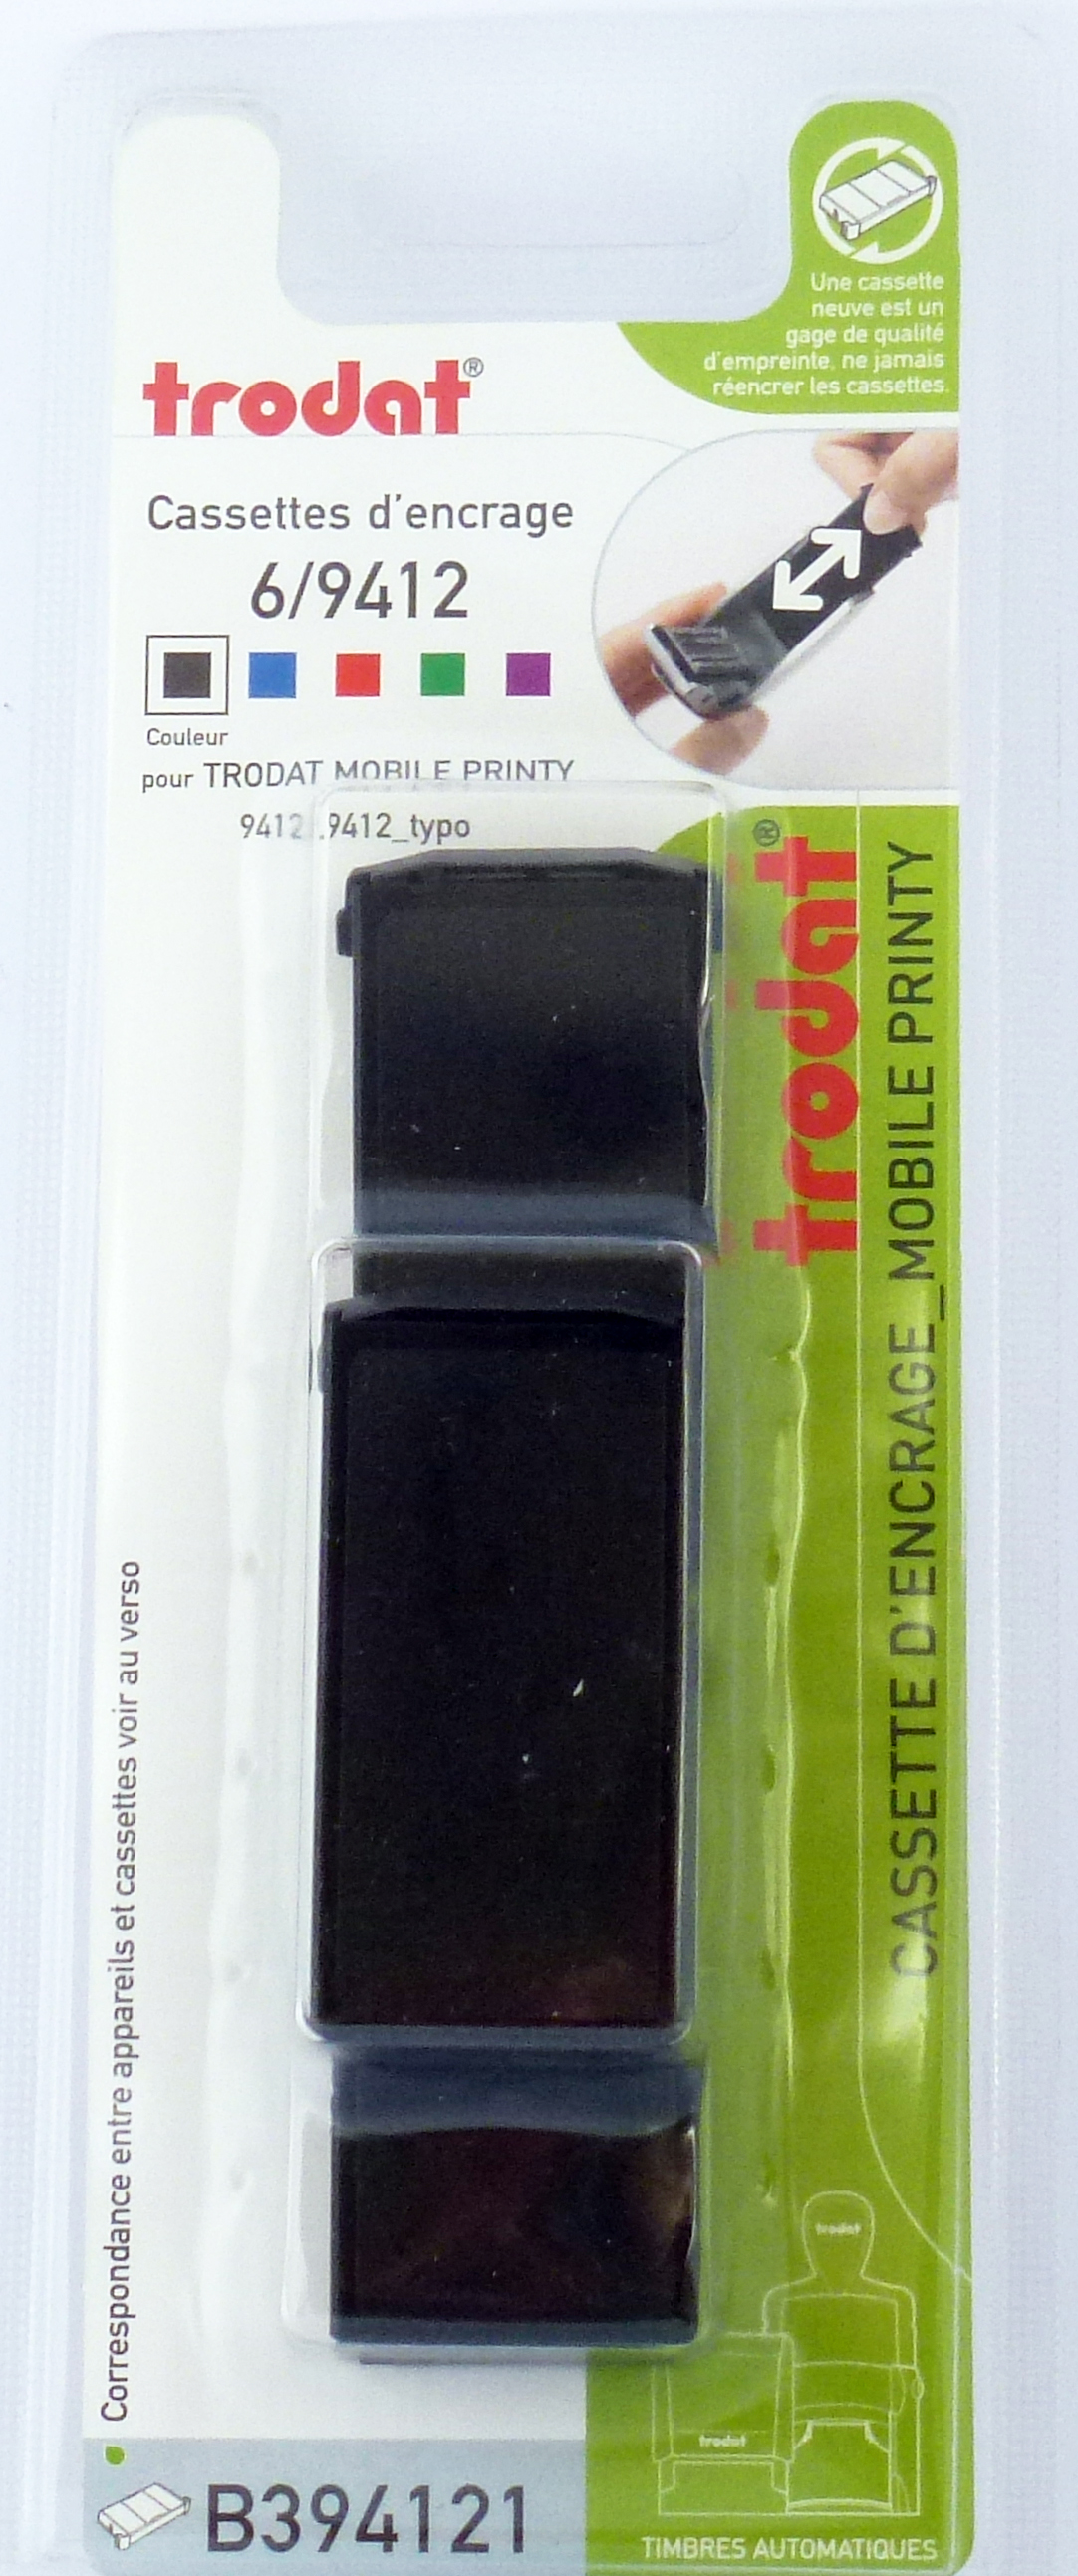 Trodat - 3 Encriers 6/9412 recharges pour tampon Mobile Printy 9412 - noir